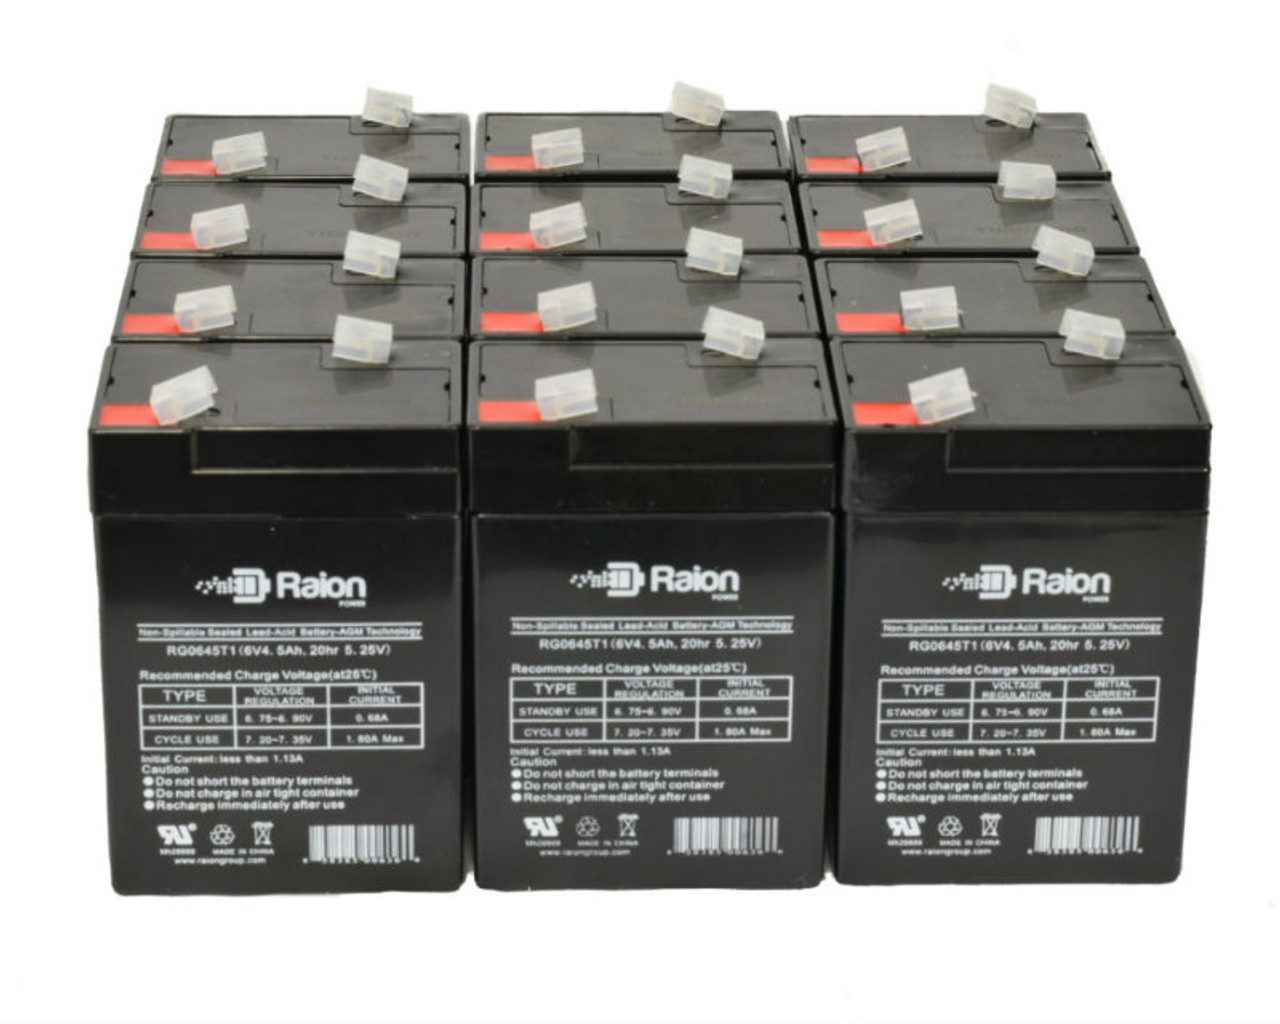 Raion Power 6V 4.5Ah Replacement Emergency Light Battery for Tork 650 - 12 Pack